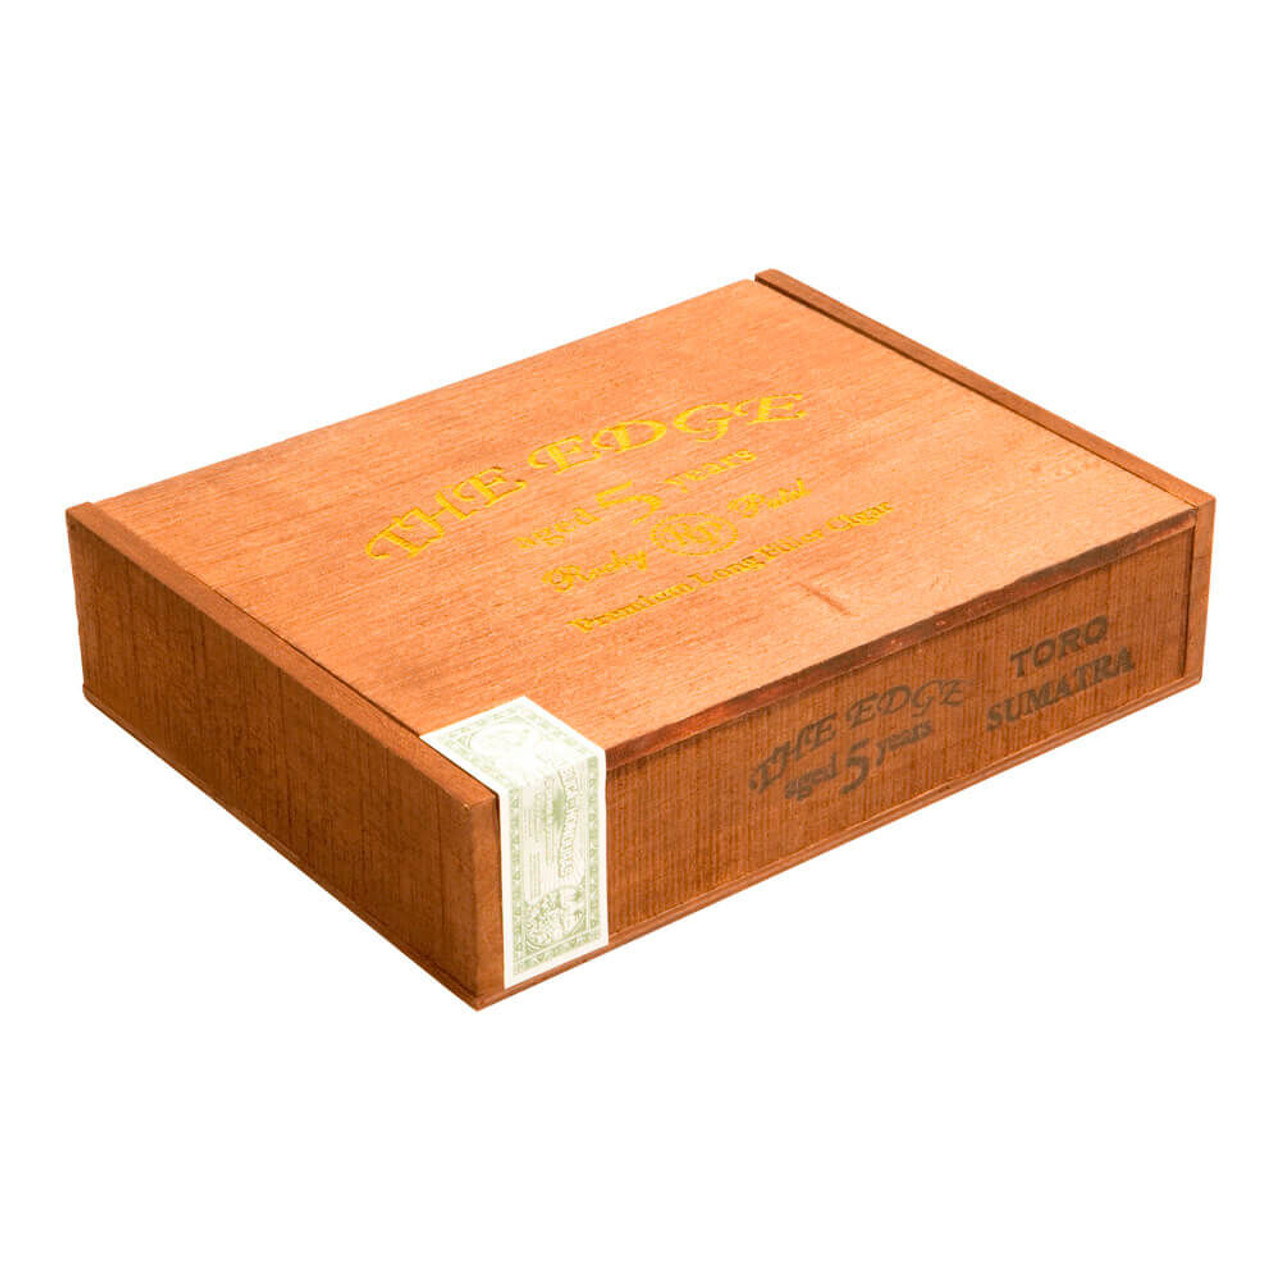 Rocky Patel The Edge Sumatra Toro Cigars - 6 x 52 (Box of 20)